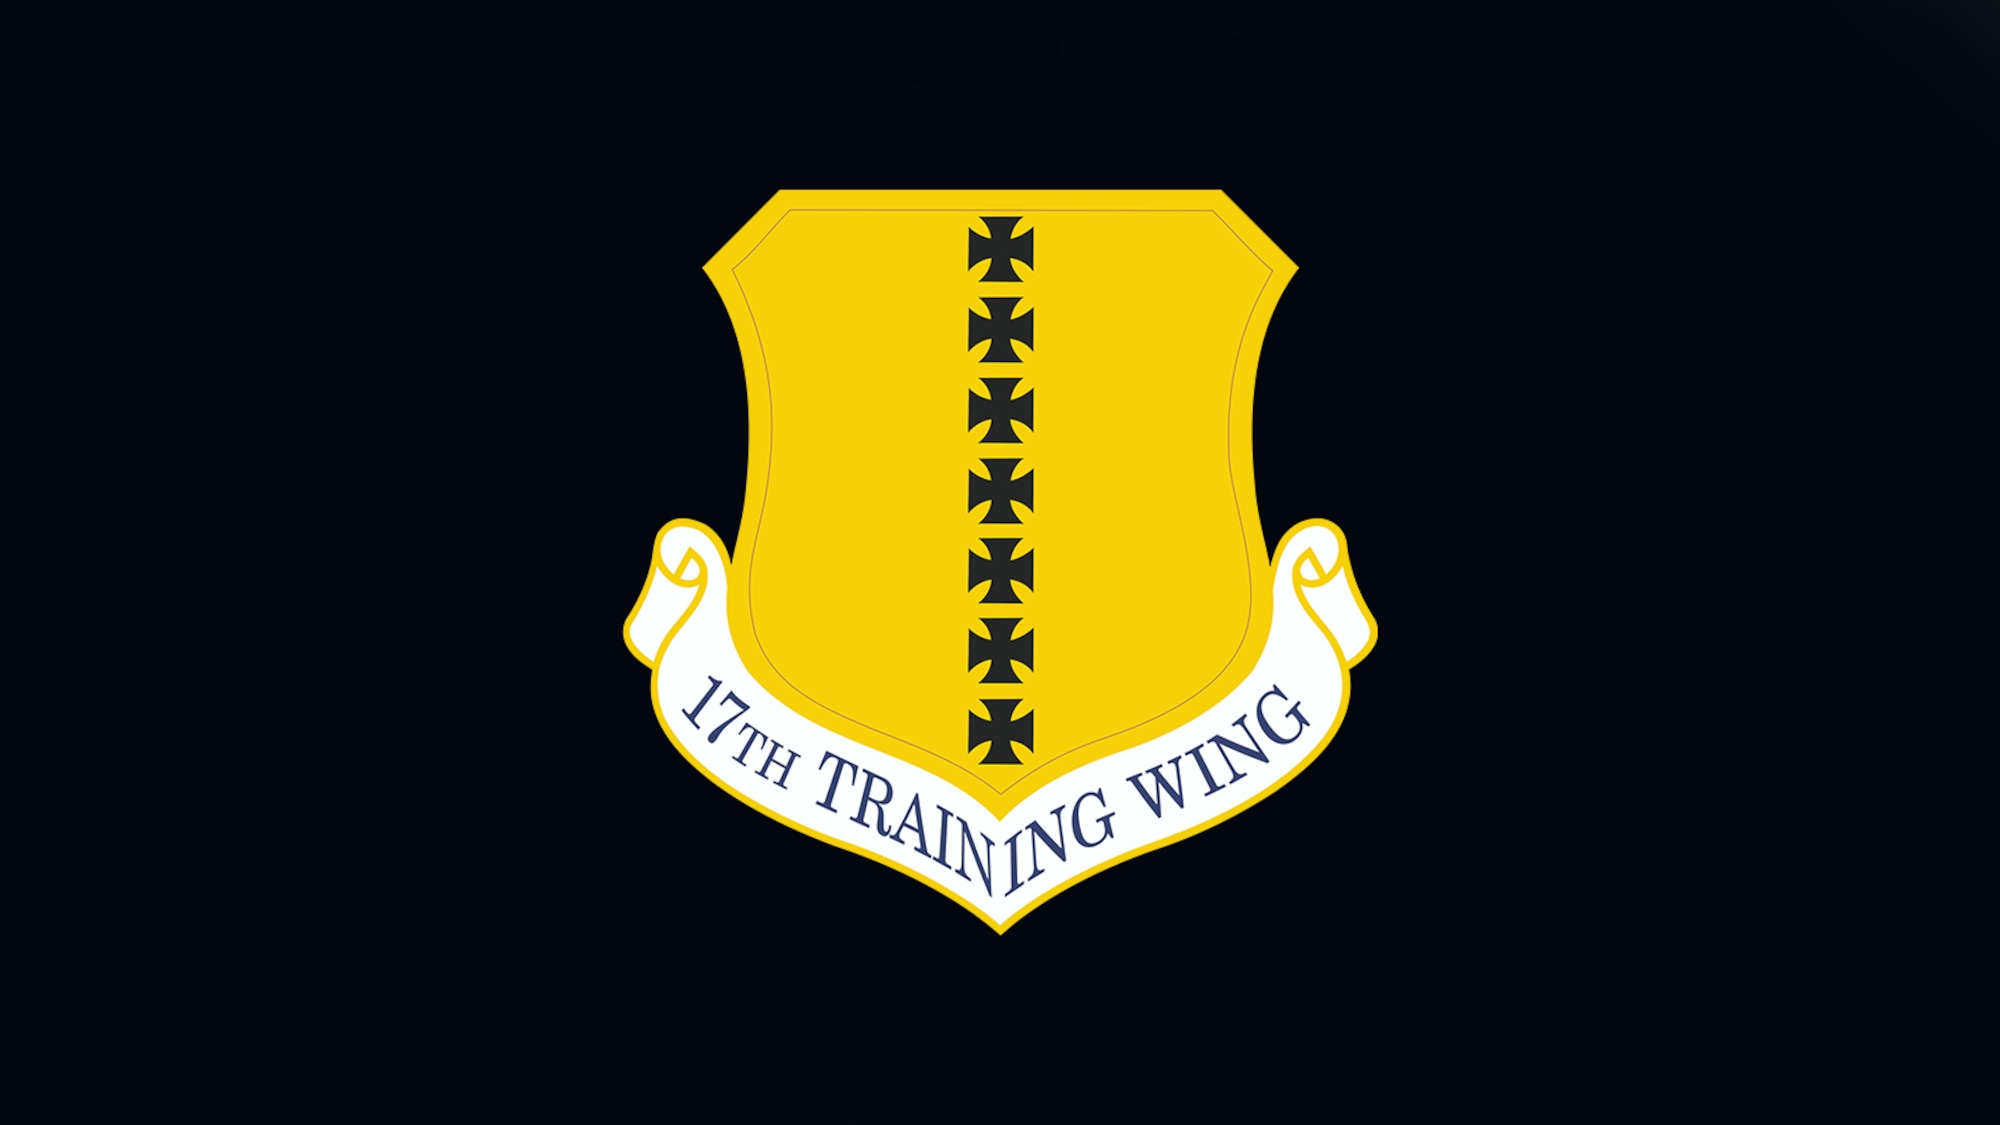 17th Training Wing emblem